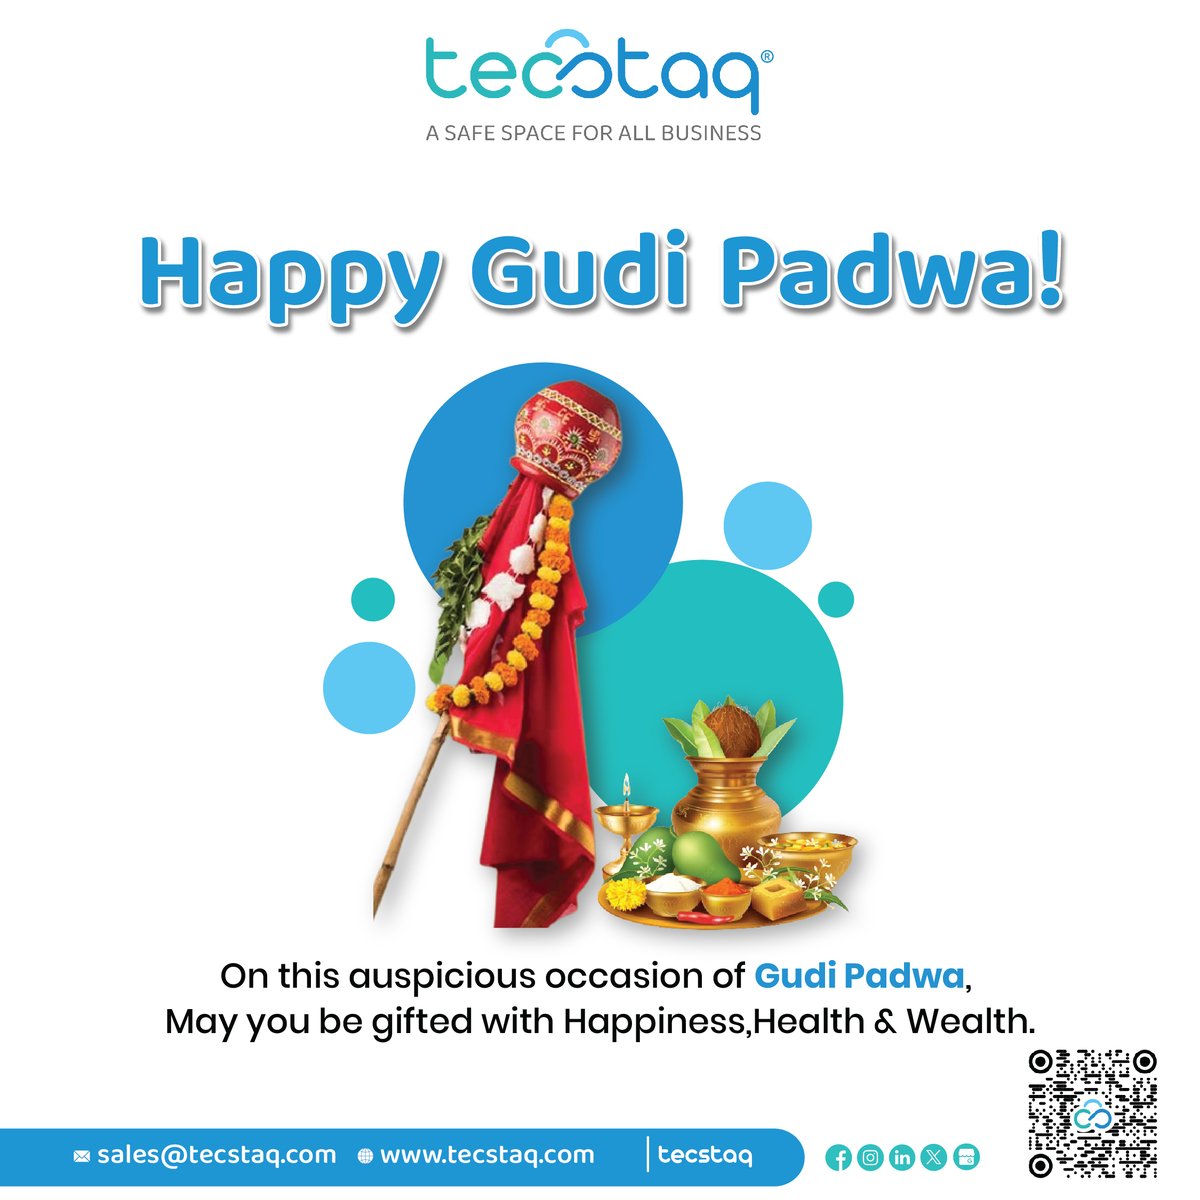 May the festivities of Gudi Padwa bring our families closer and create beautiful memories for the year ahead. 𝐇𝐚𝐩𝐩𝐲 𝐆𝐮𝐝𝐢𝐏𝐚𝐝𝐰𝐚 #TecStaq #GreenAims #GudhiPadwa #MaharashtrianNewYear #NewBeginnings #GudiPadwa #नववर्ष #Tradition #Celebration #FestivalVibes